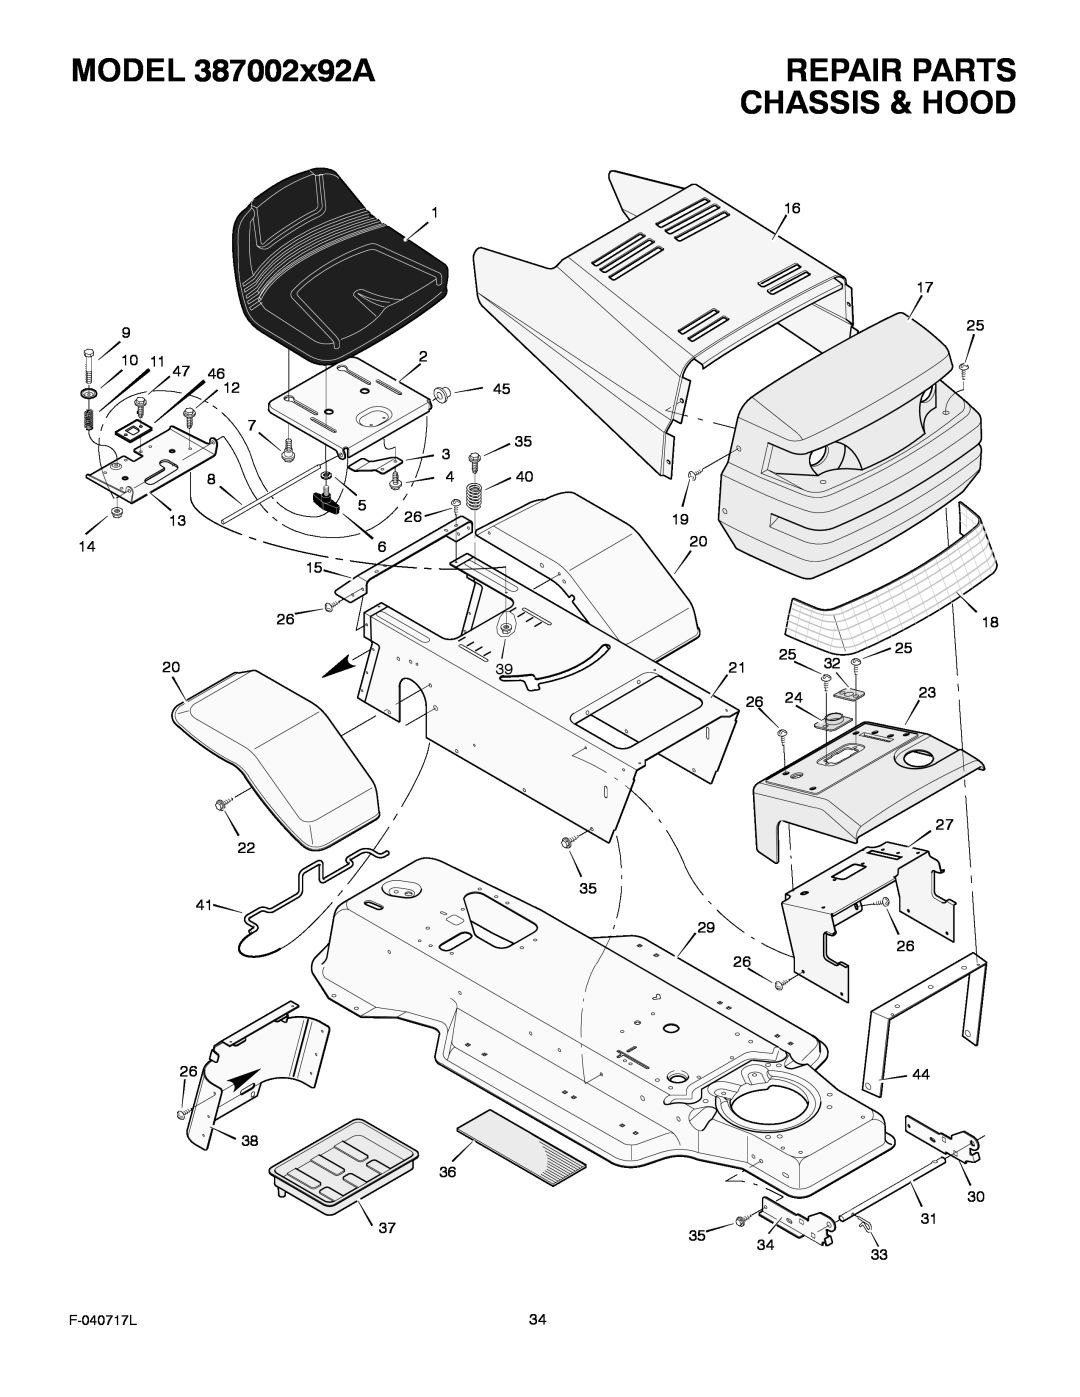 Murray manual MODEL 387002x92A, Repair Parts, Chassis & Hood, F-040717L 